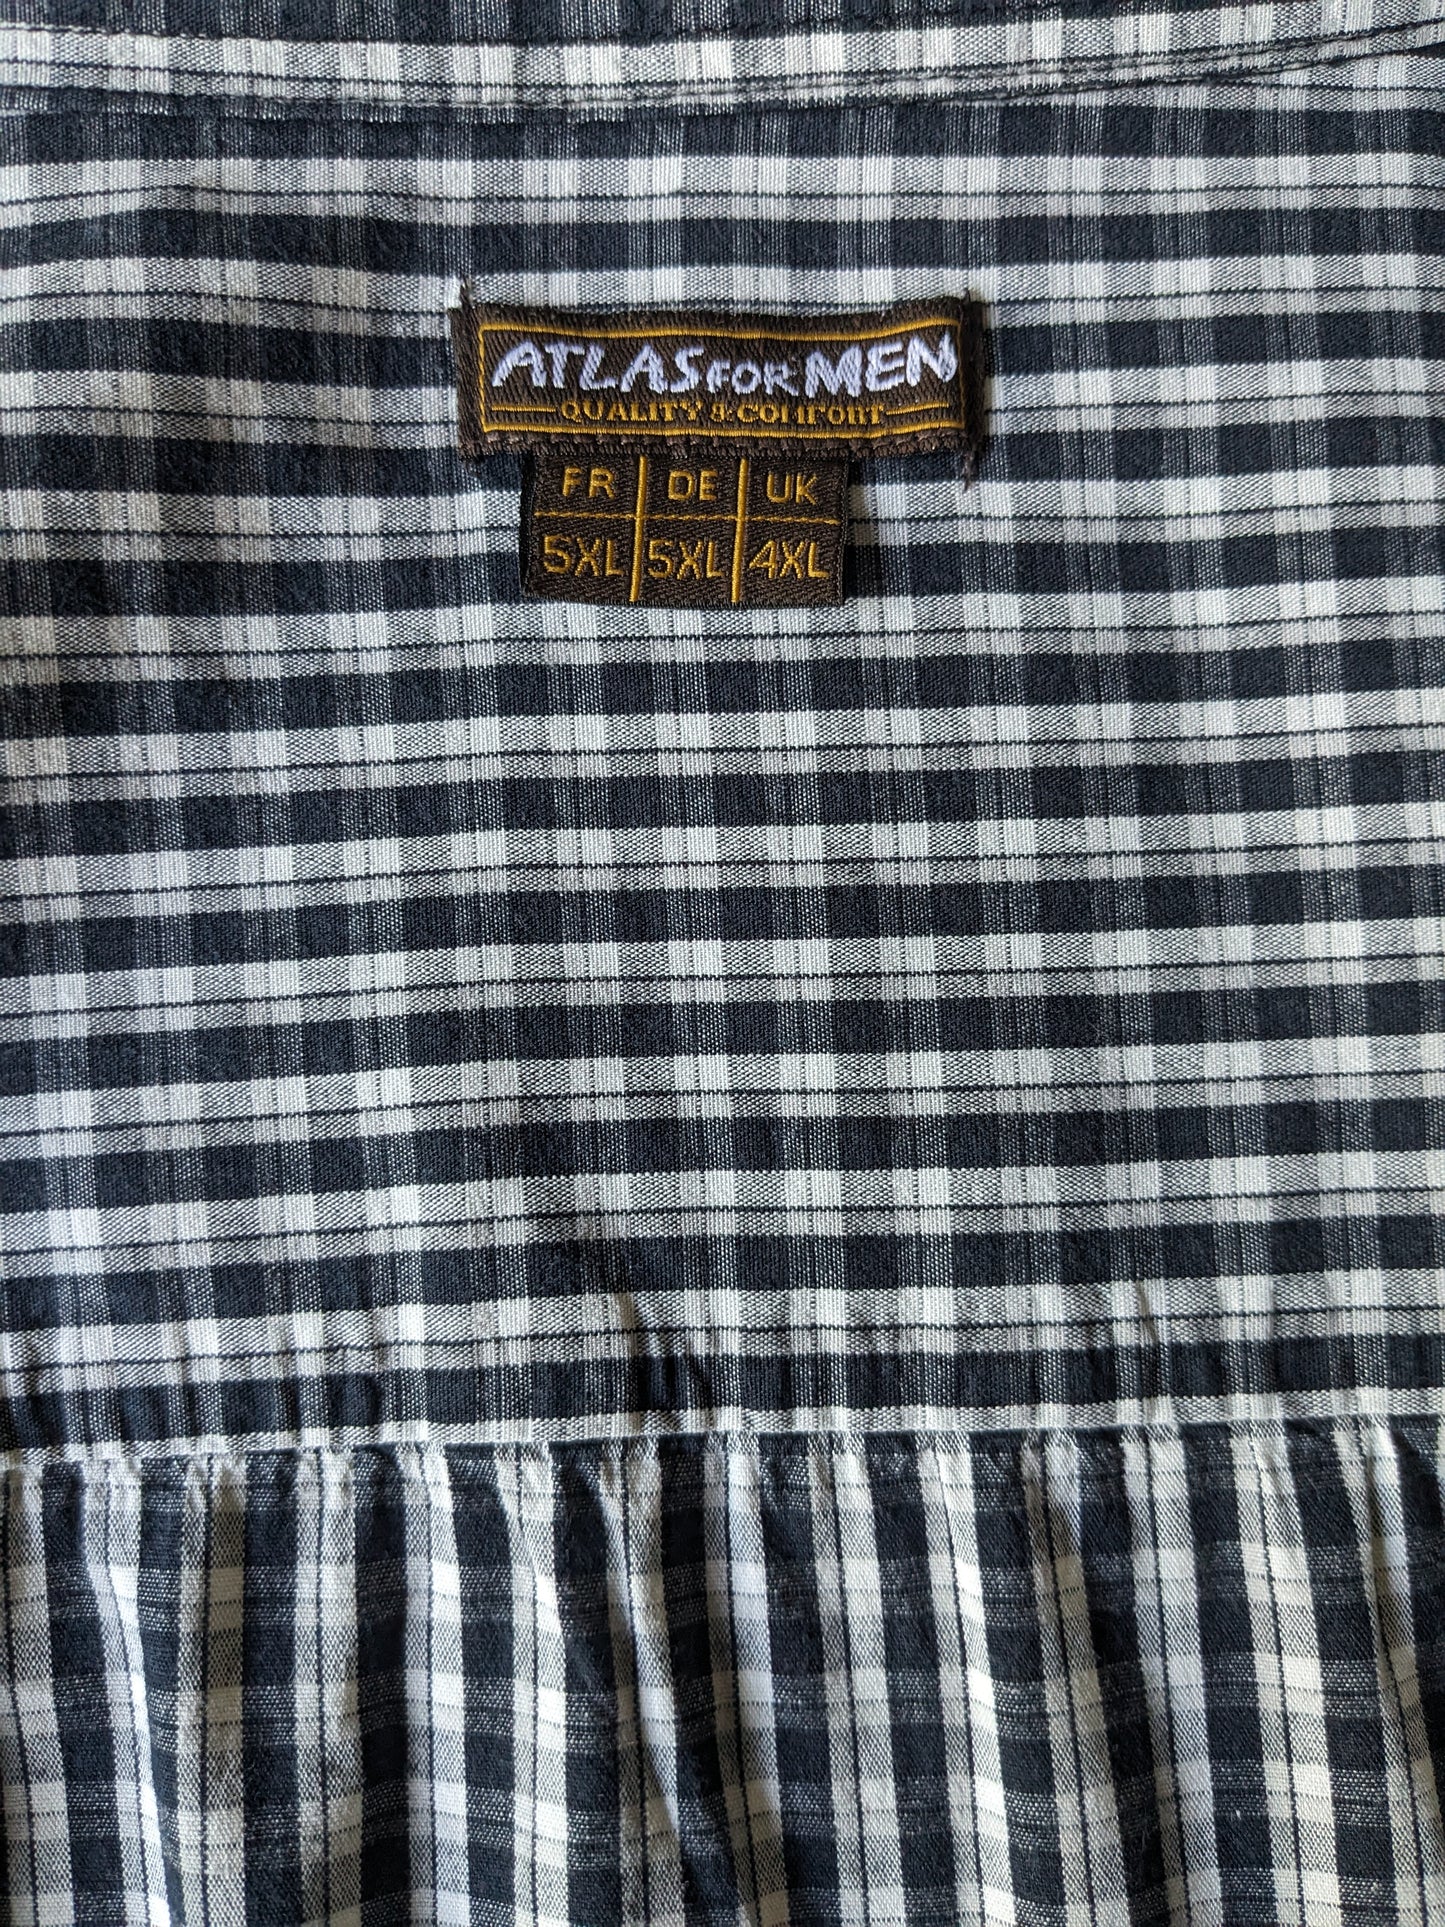 Atlas for men shirt. Beige black checked. Size 5XL / XXXXXL.